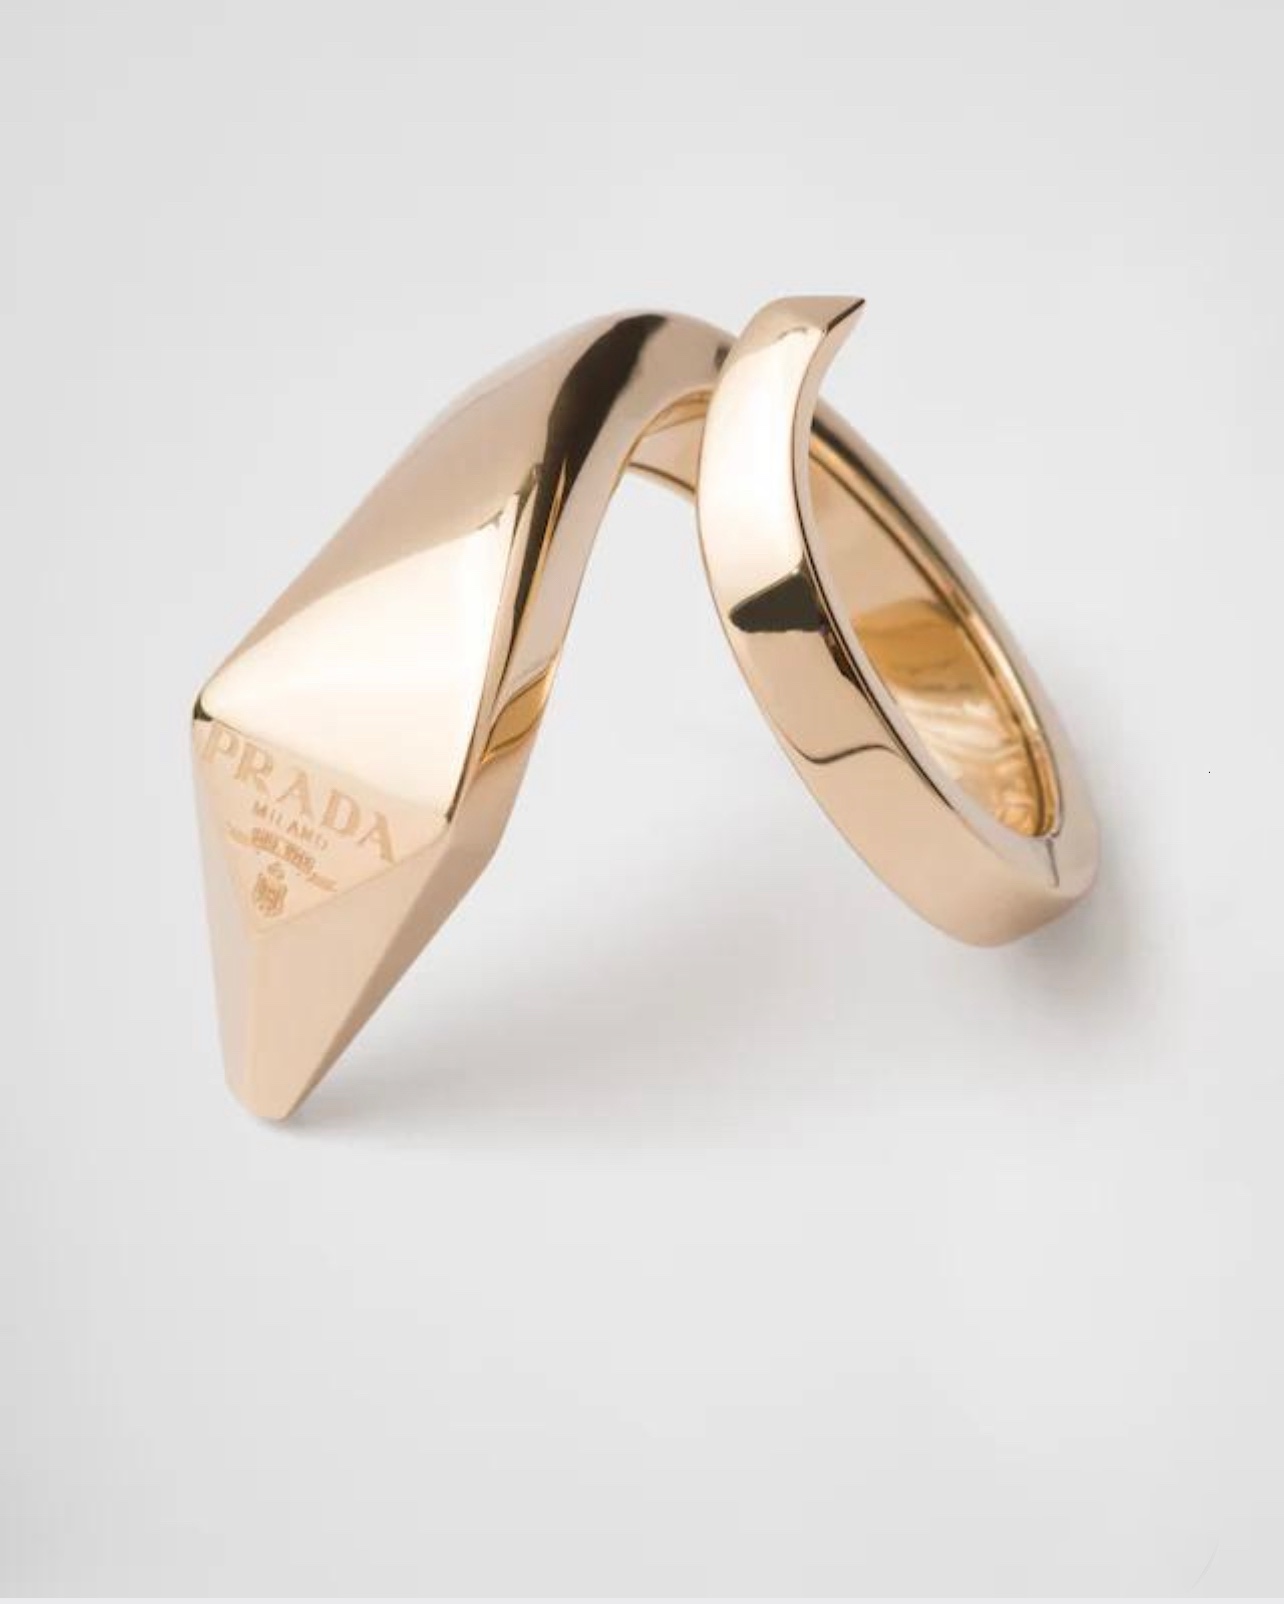 Prada Jewelry Ring- Gold